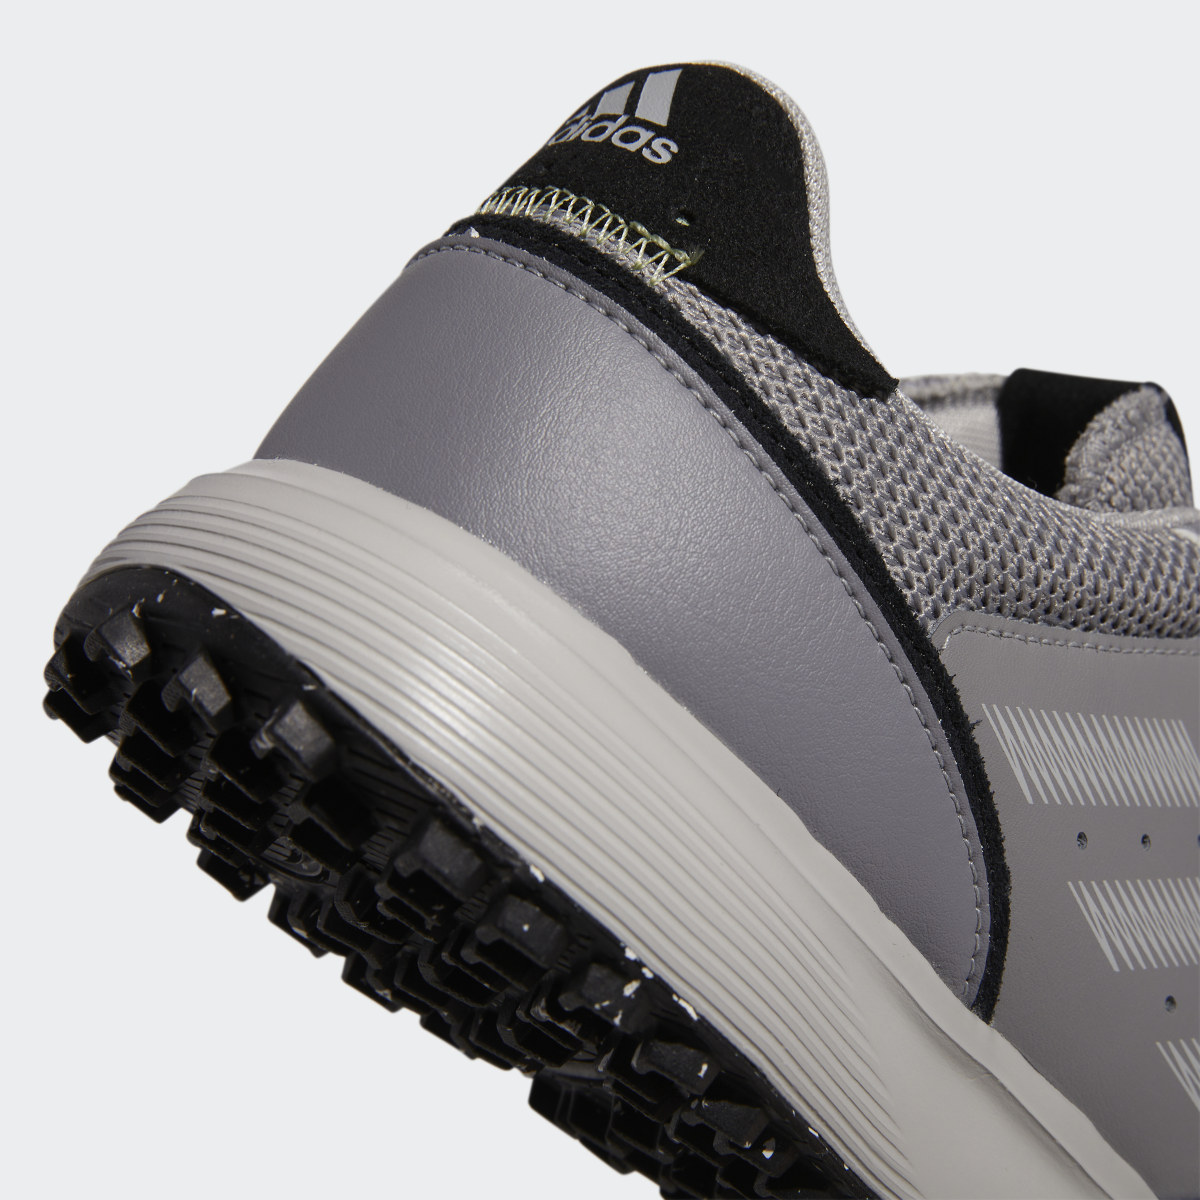 Adidas Chaussure de golf S2G sans crampons Leather. 9